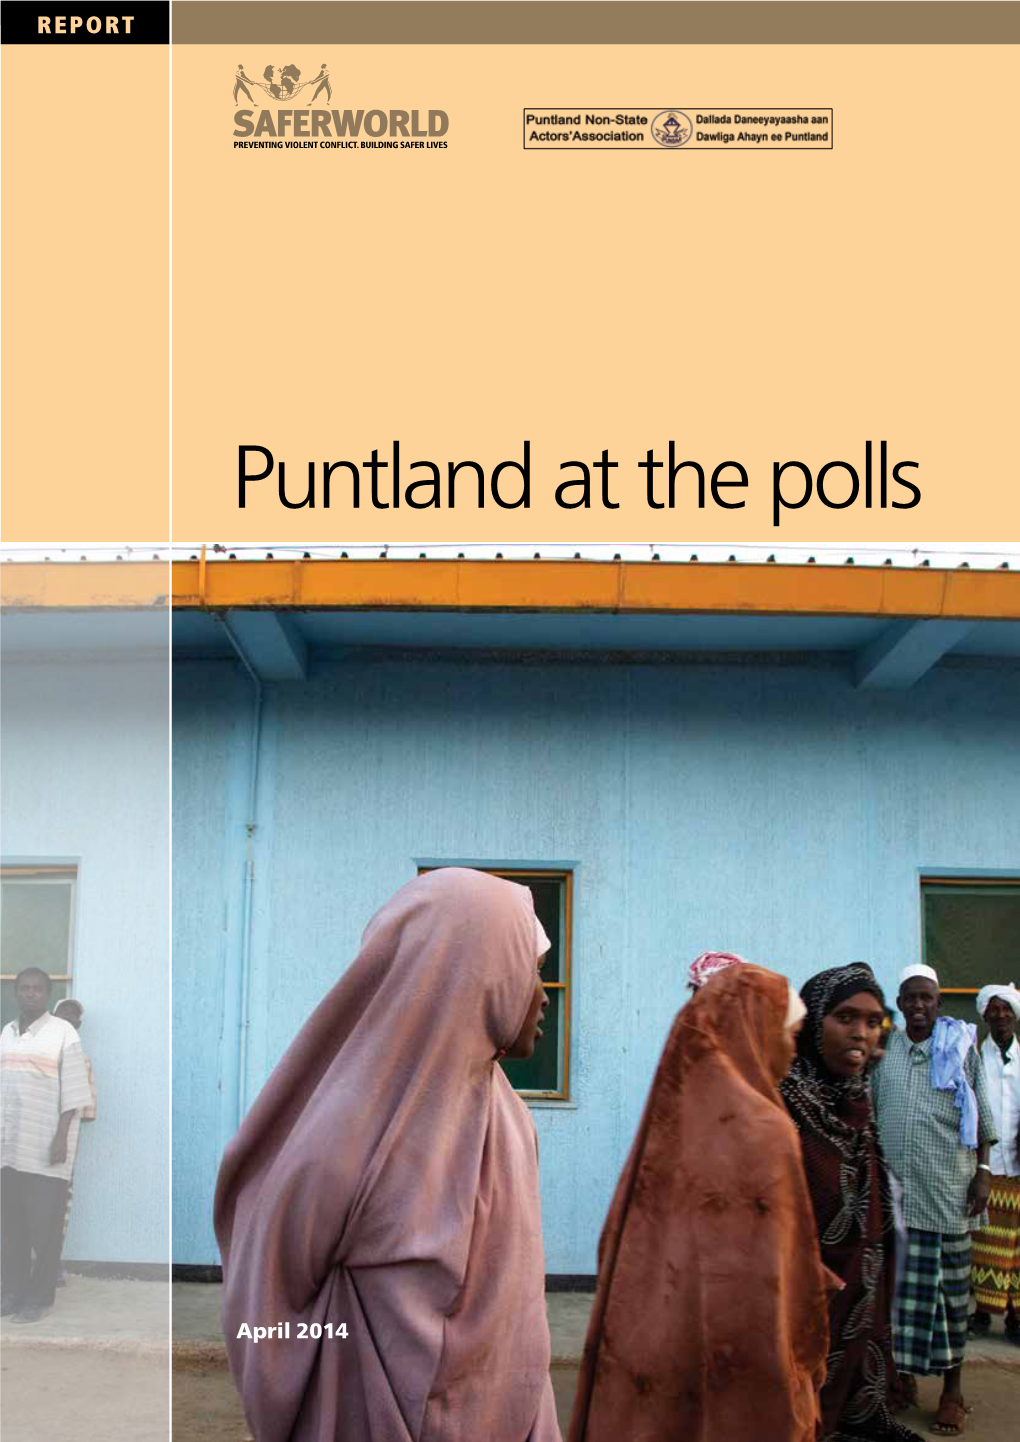 Puntland at the Polls